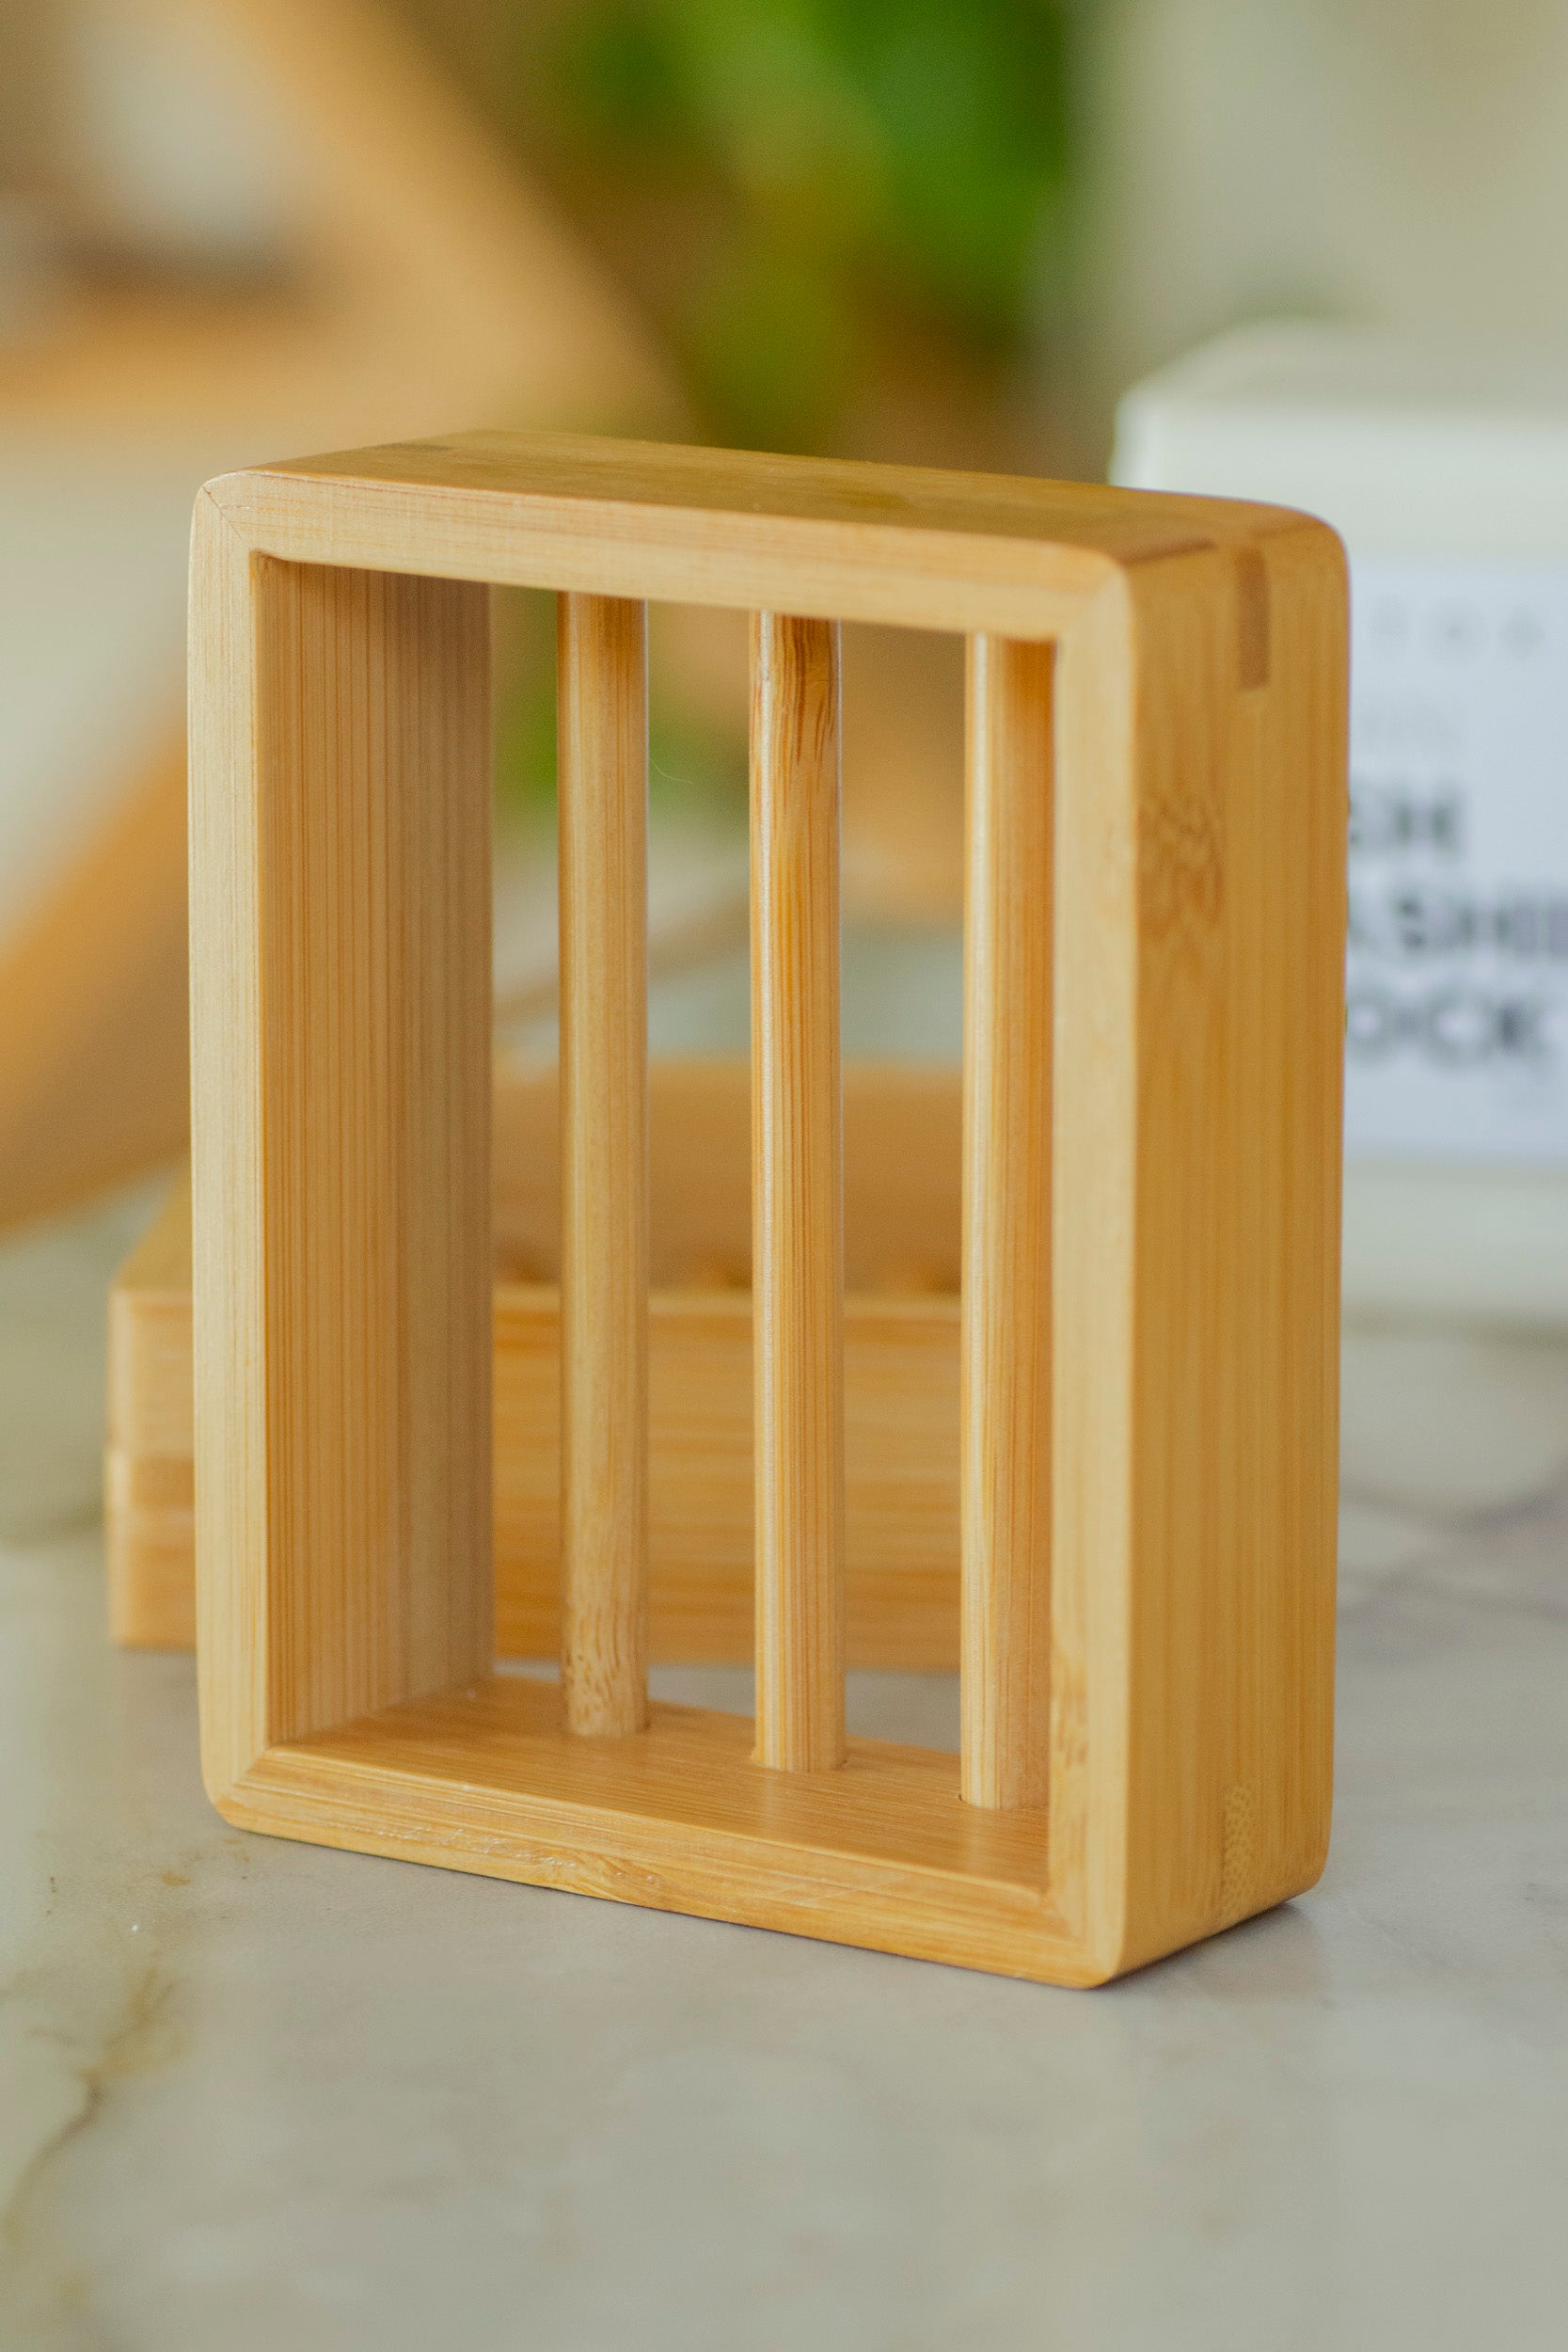 Bamboo Soap Rack